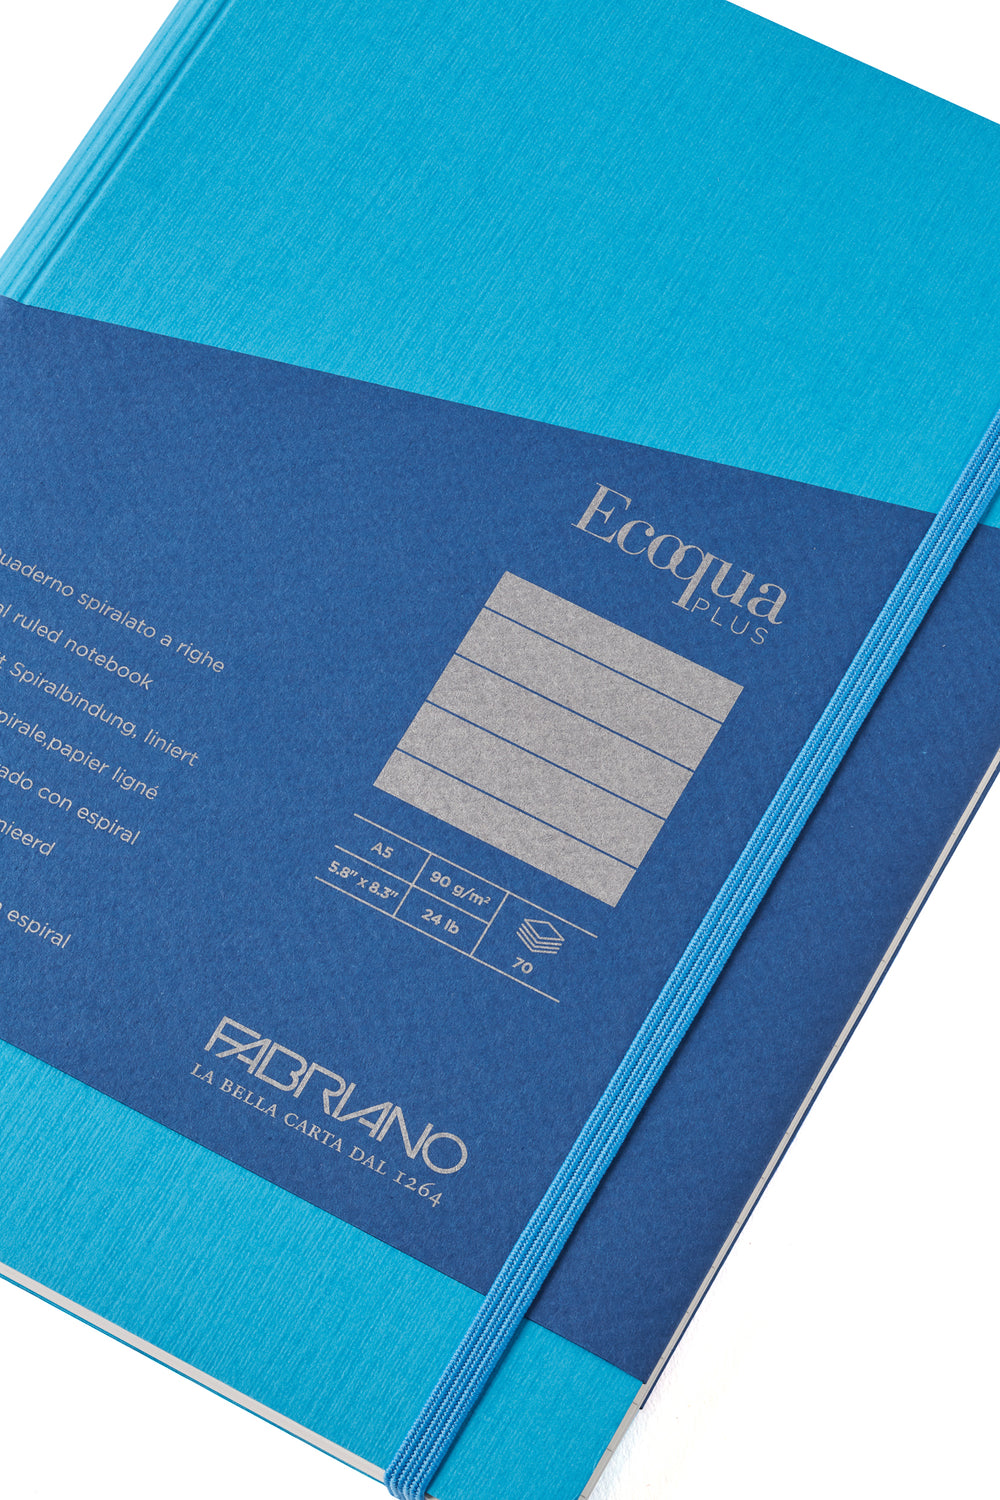 Fabriano Ecoqua+ Spiral Notebooks